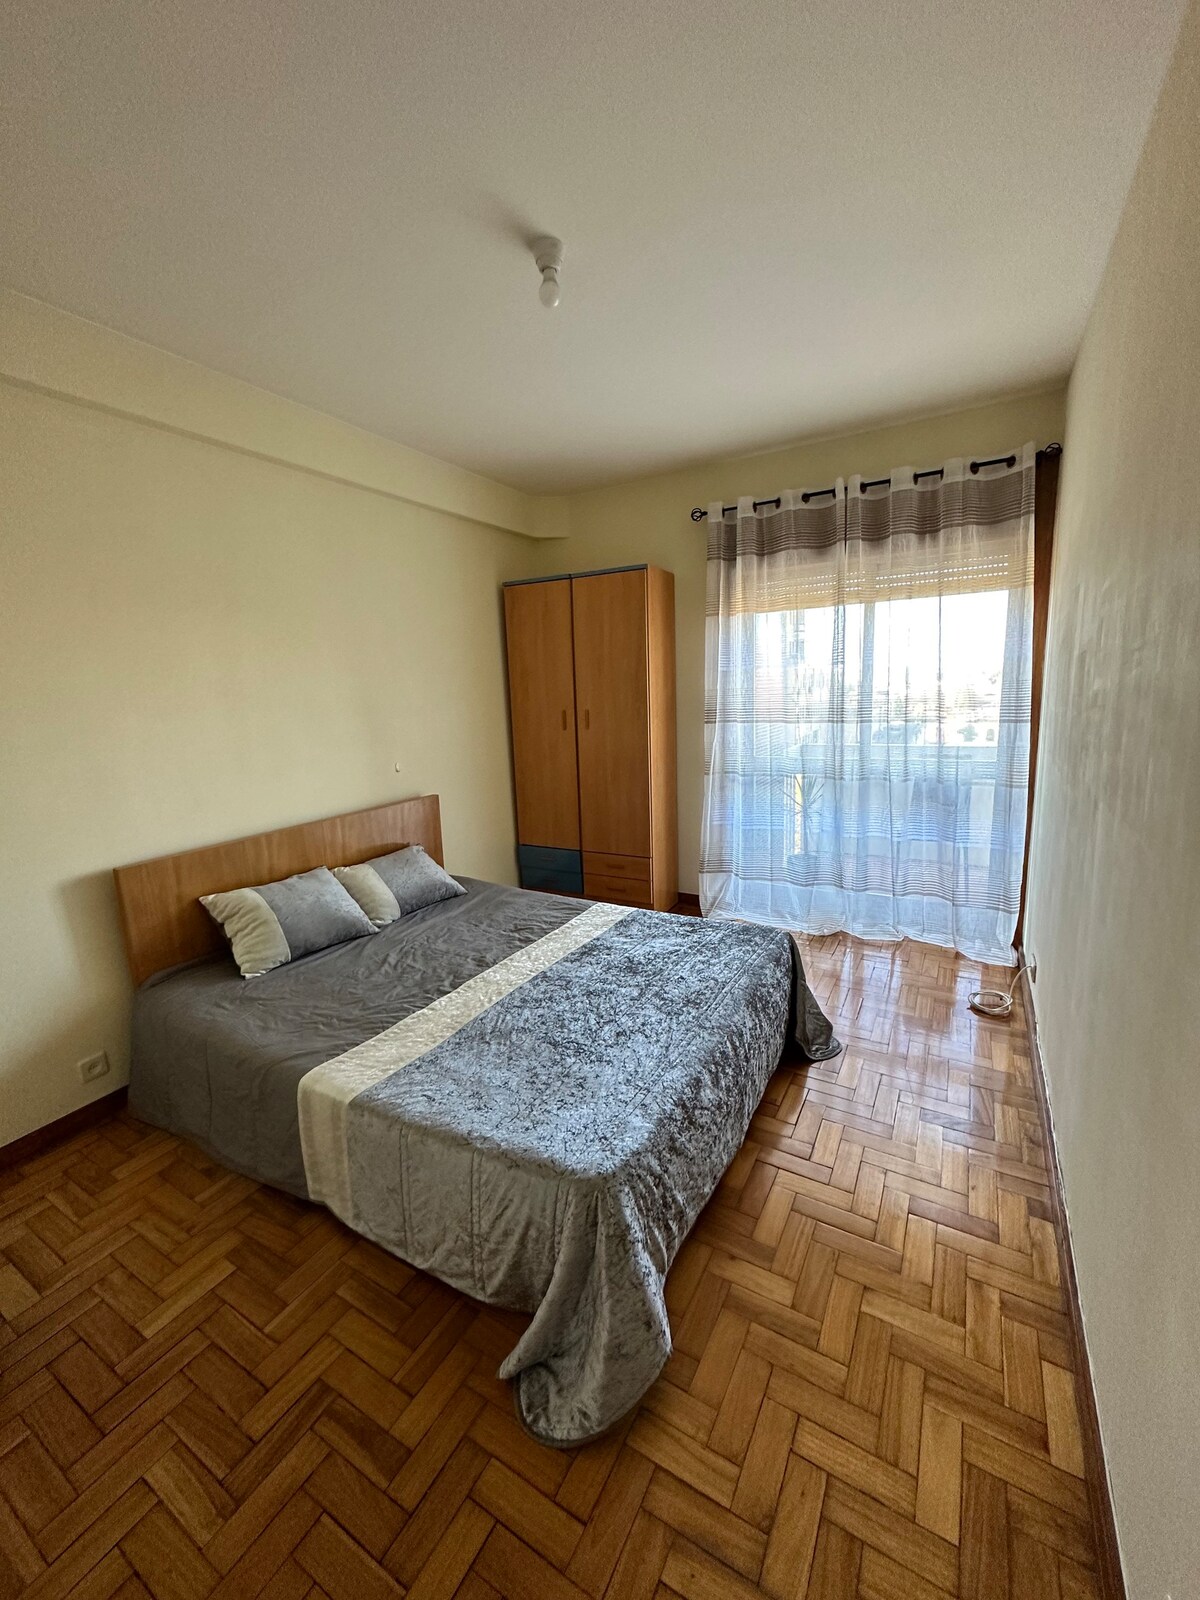 Уютная  комната в центре города Брага.